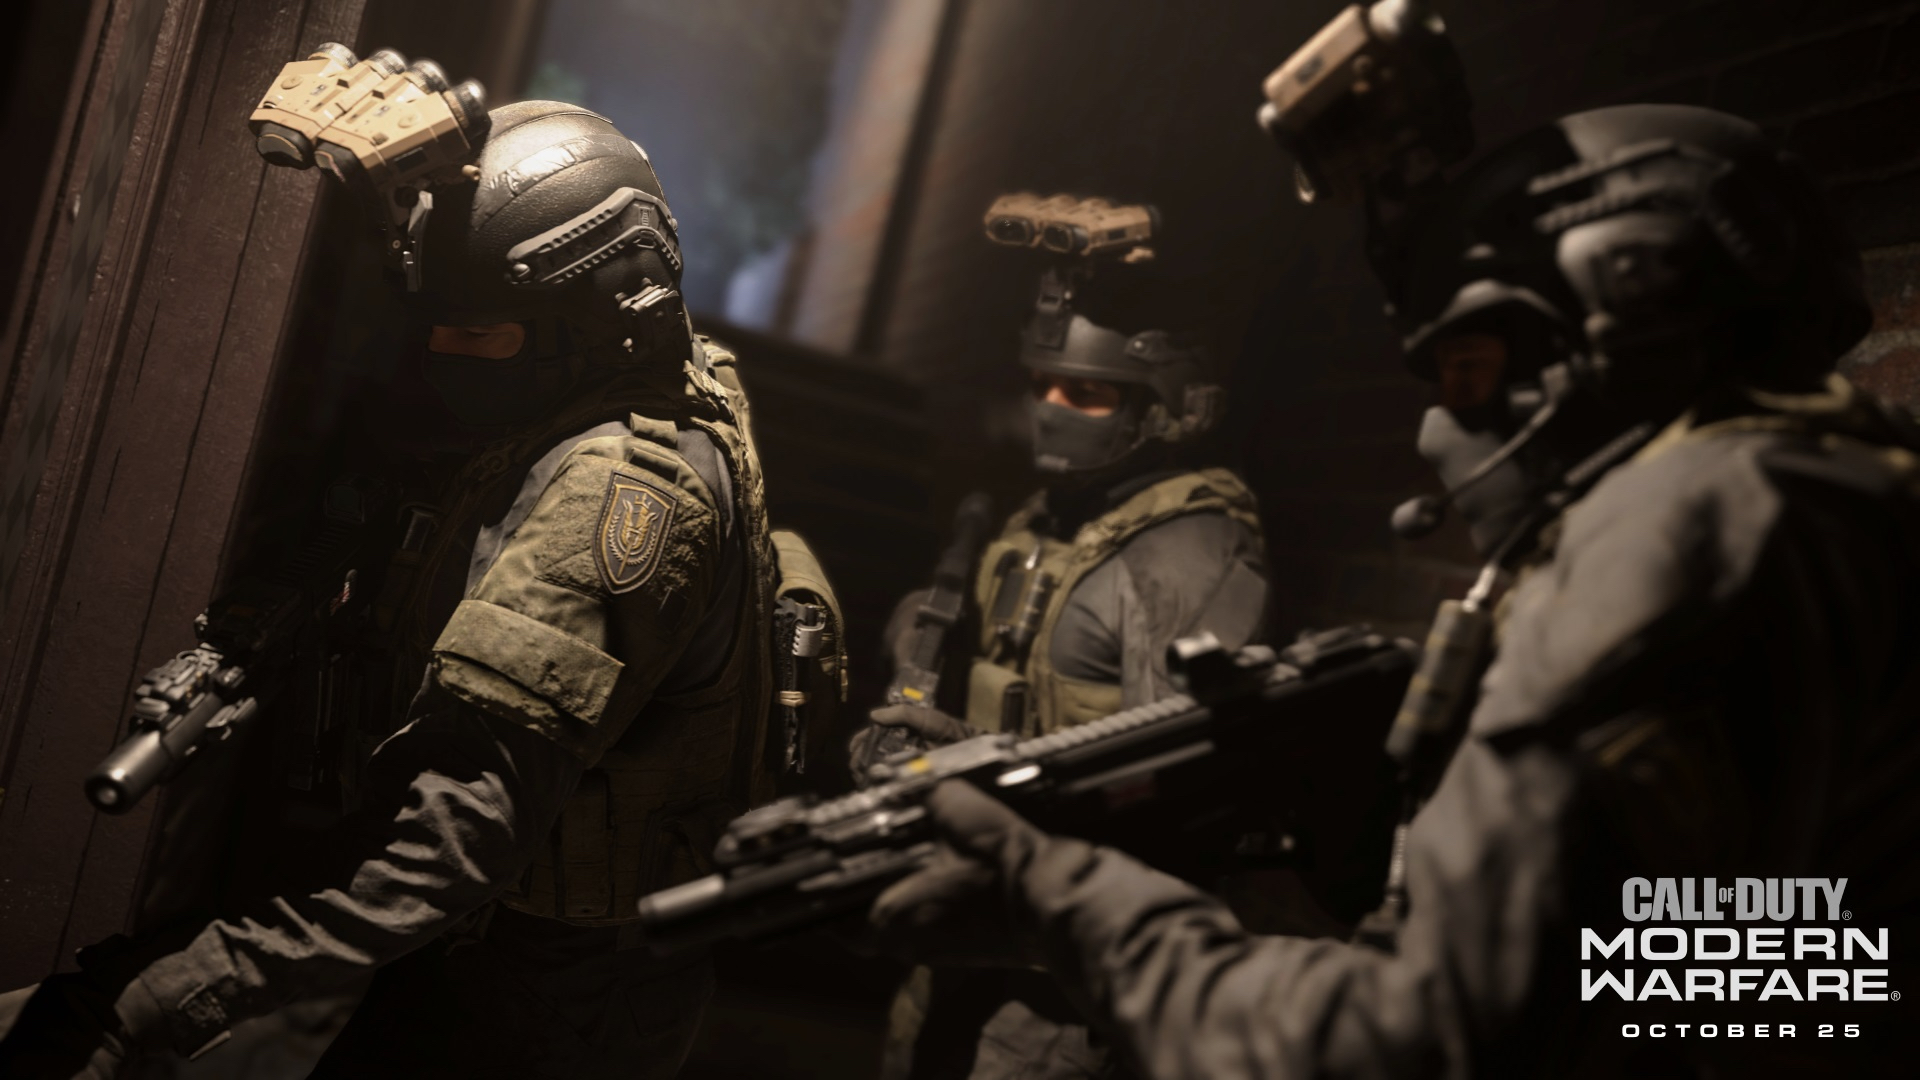 Call of Duty: Modern Warfare 2 (2022) Campaign is Set in Latin America